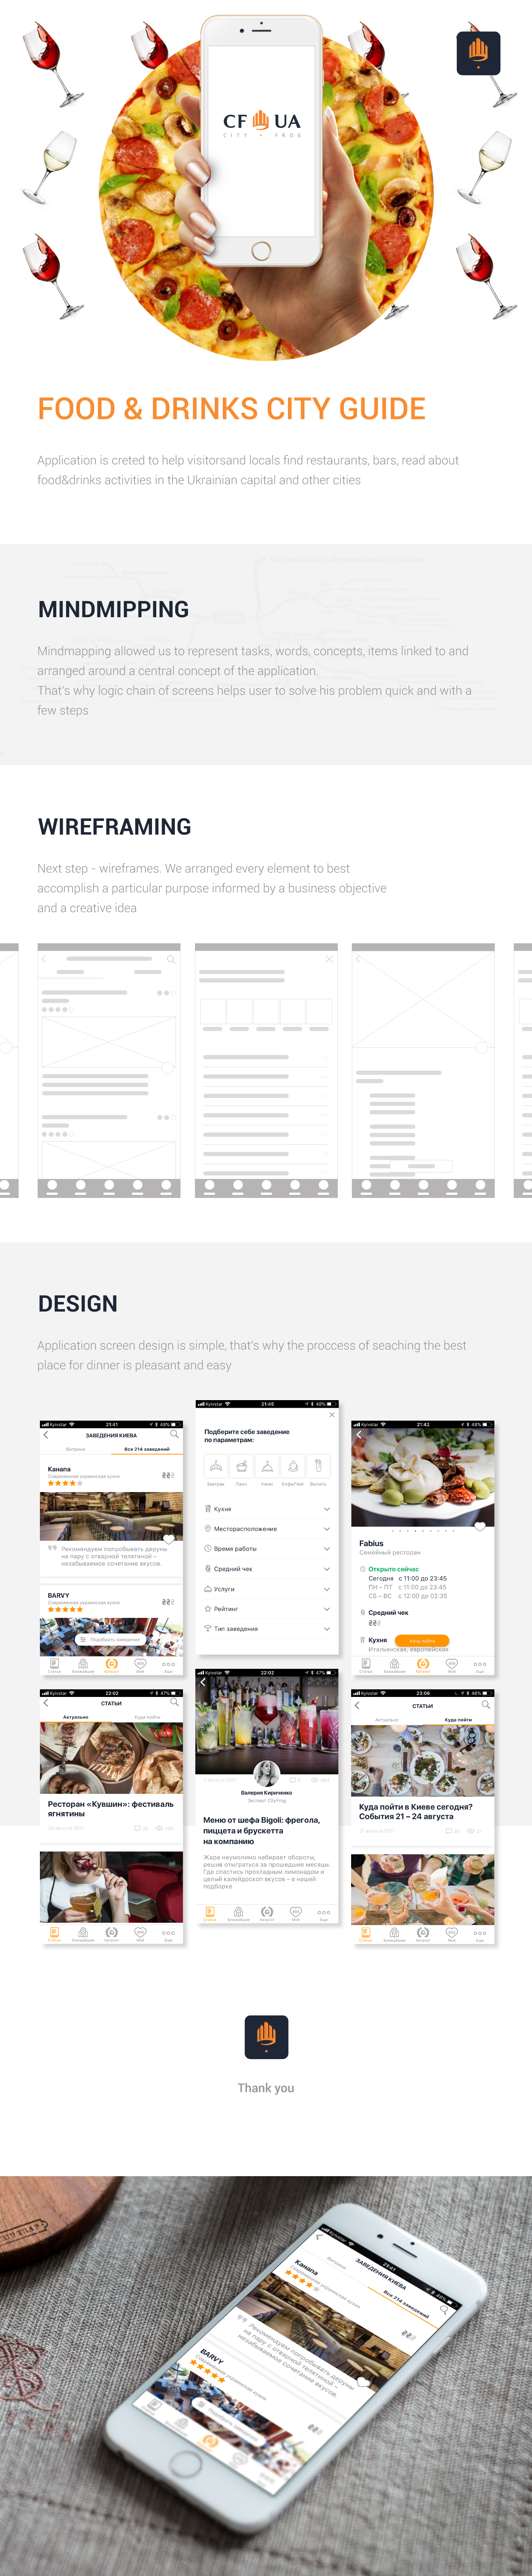 mobile app product design  ux UI Interface restaurant Food  cityfrog prototype